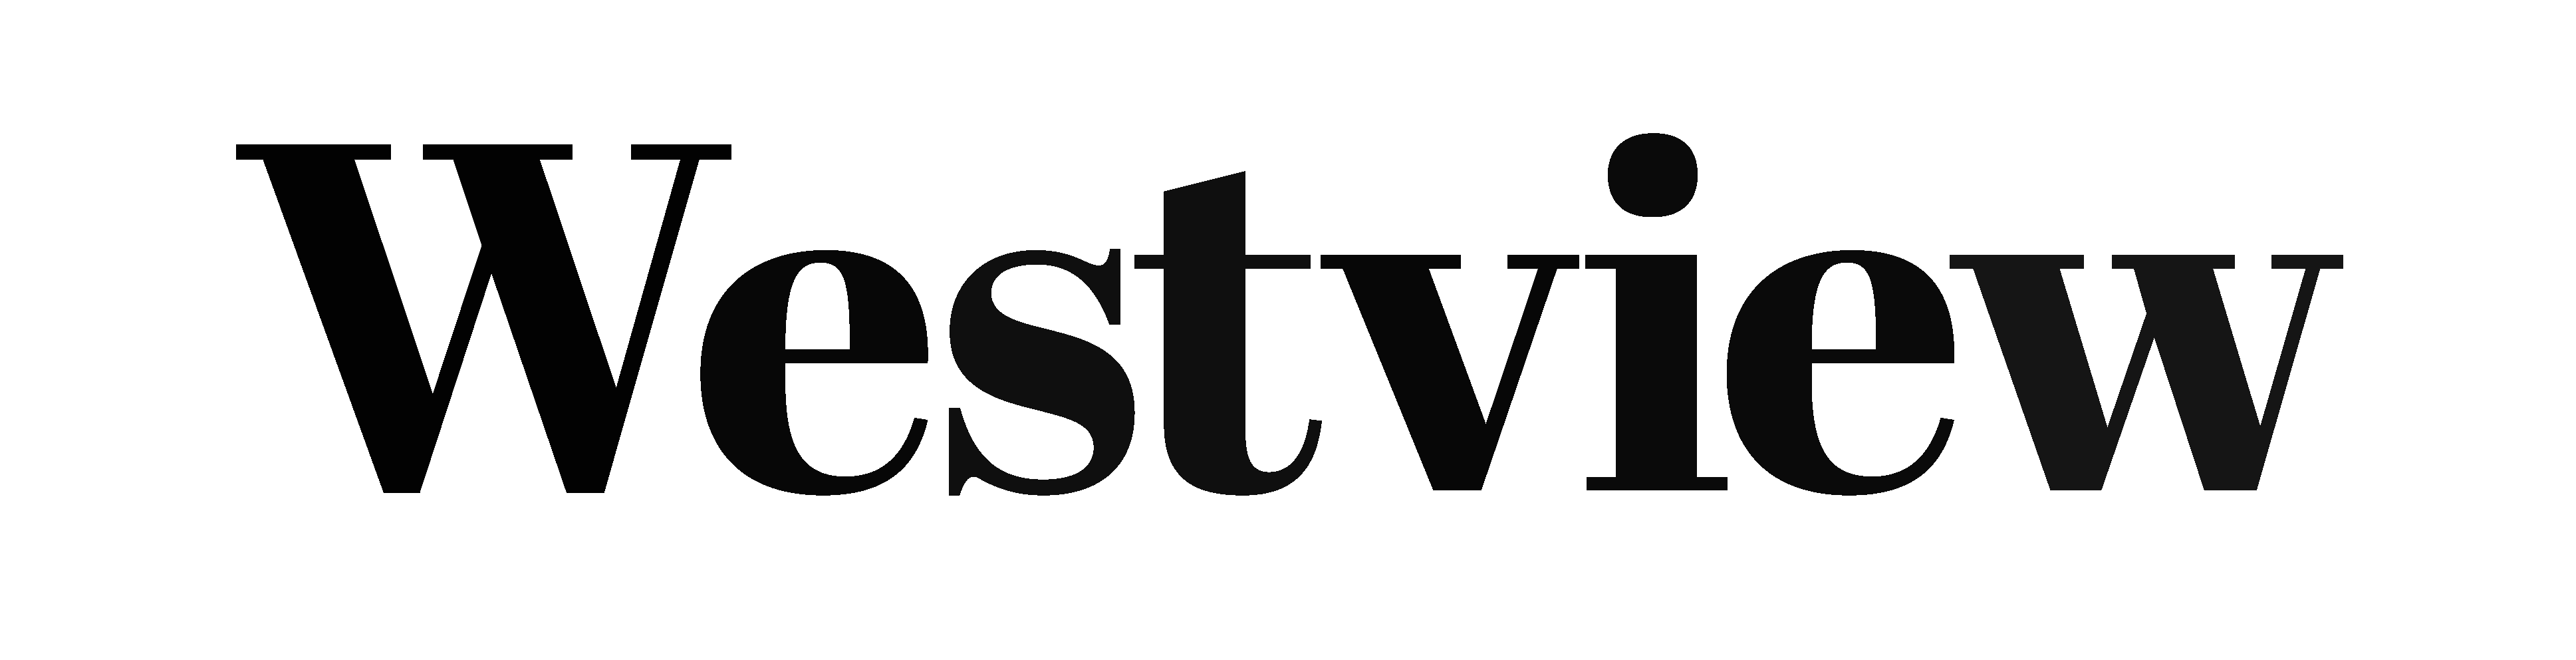 Westview logo